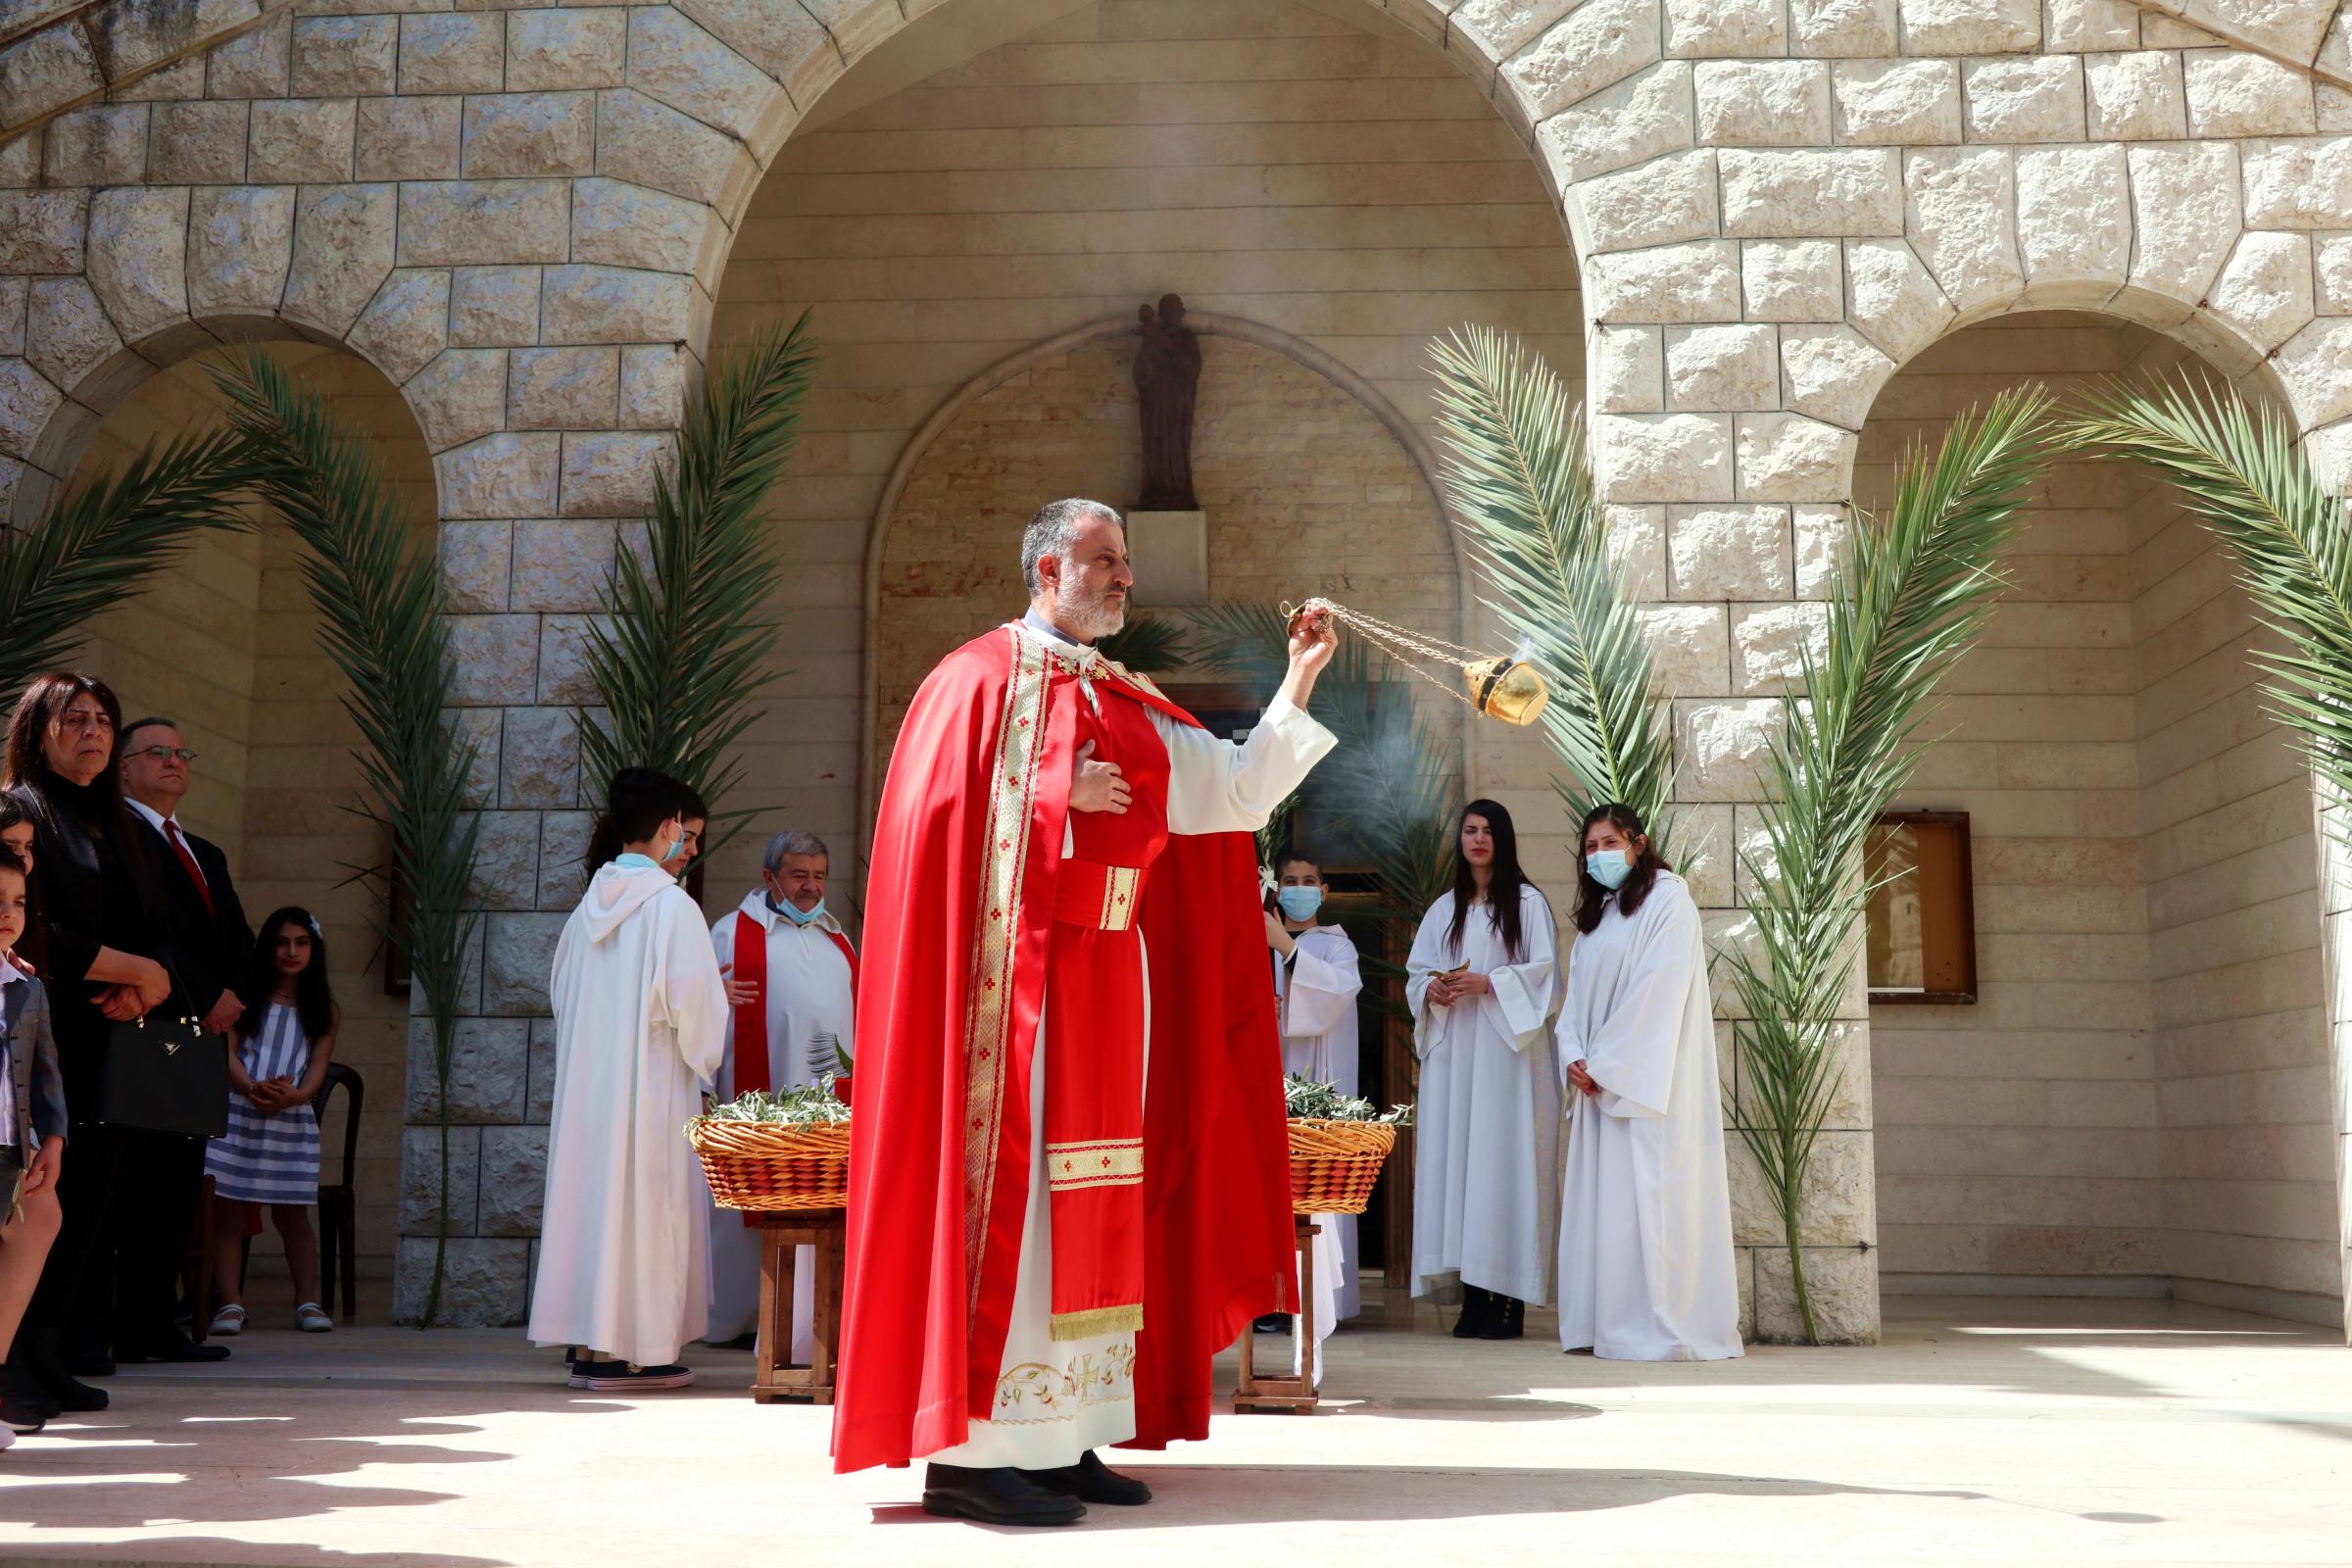 Libano - Lebanon - Palm Sunday celebration at St Joseph christian church in...